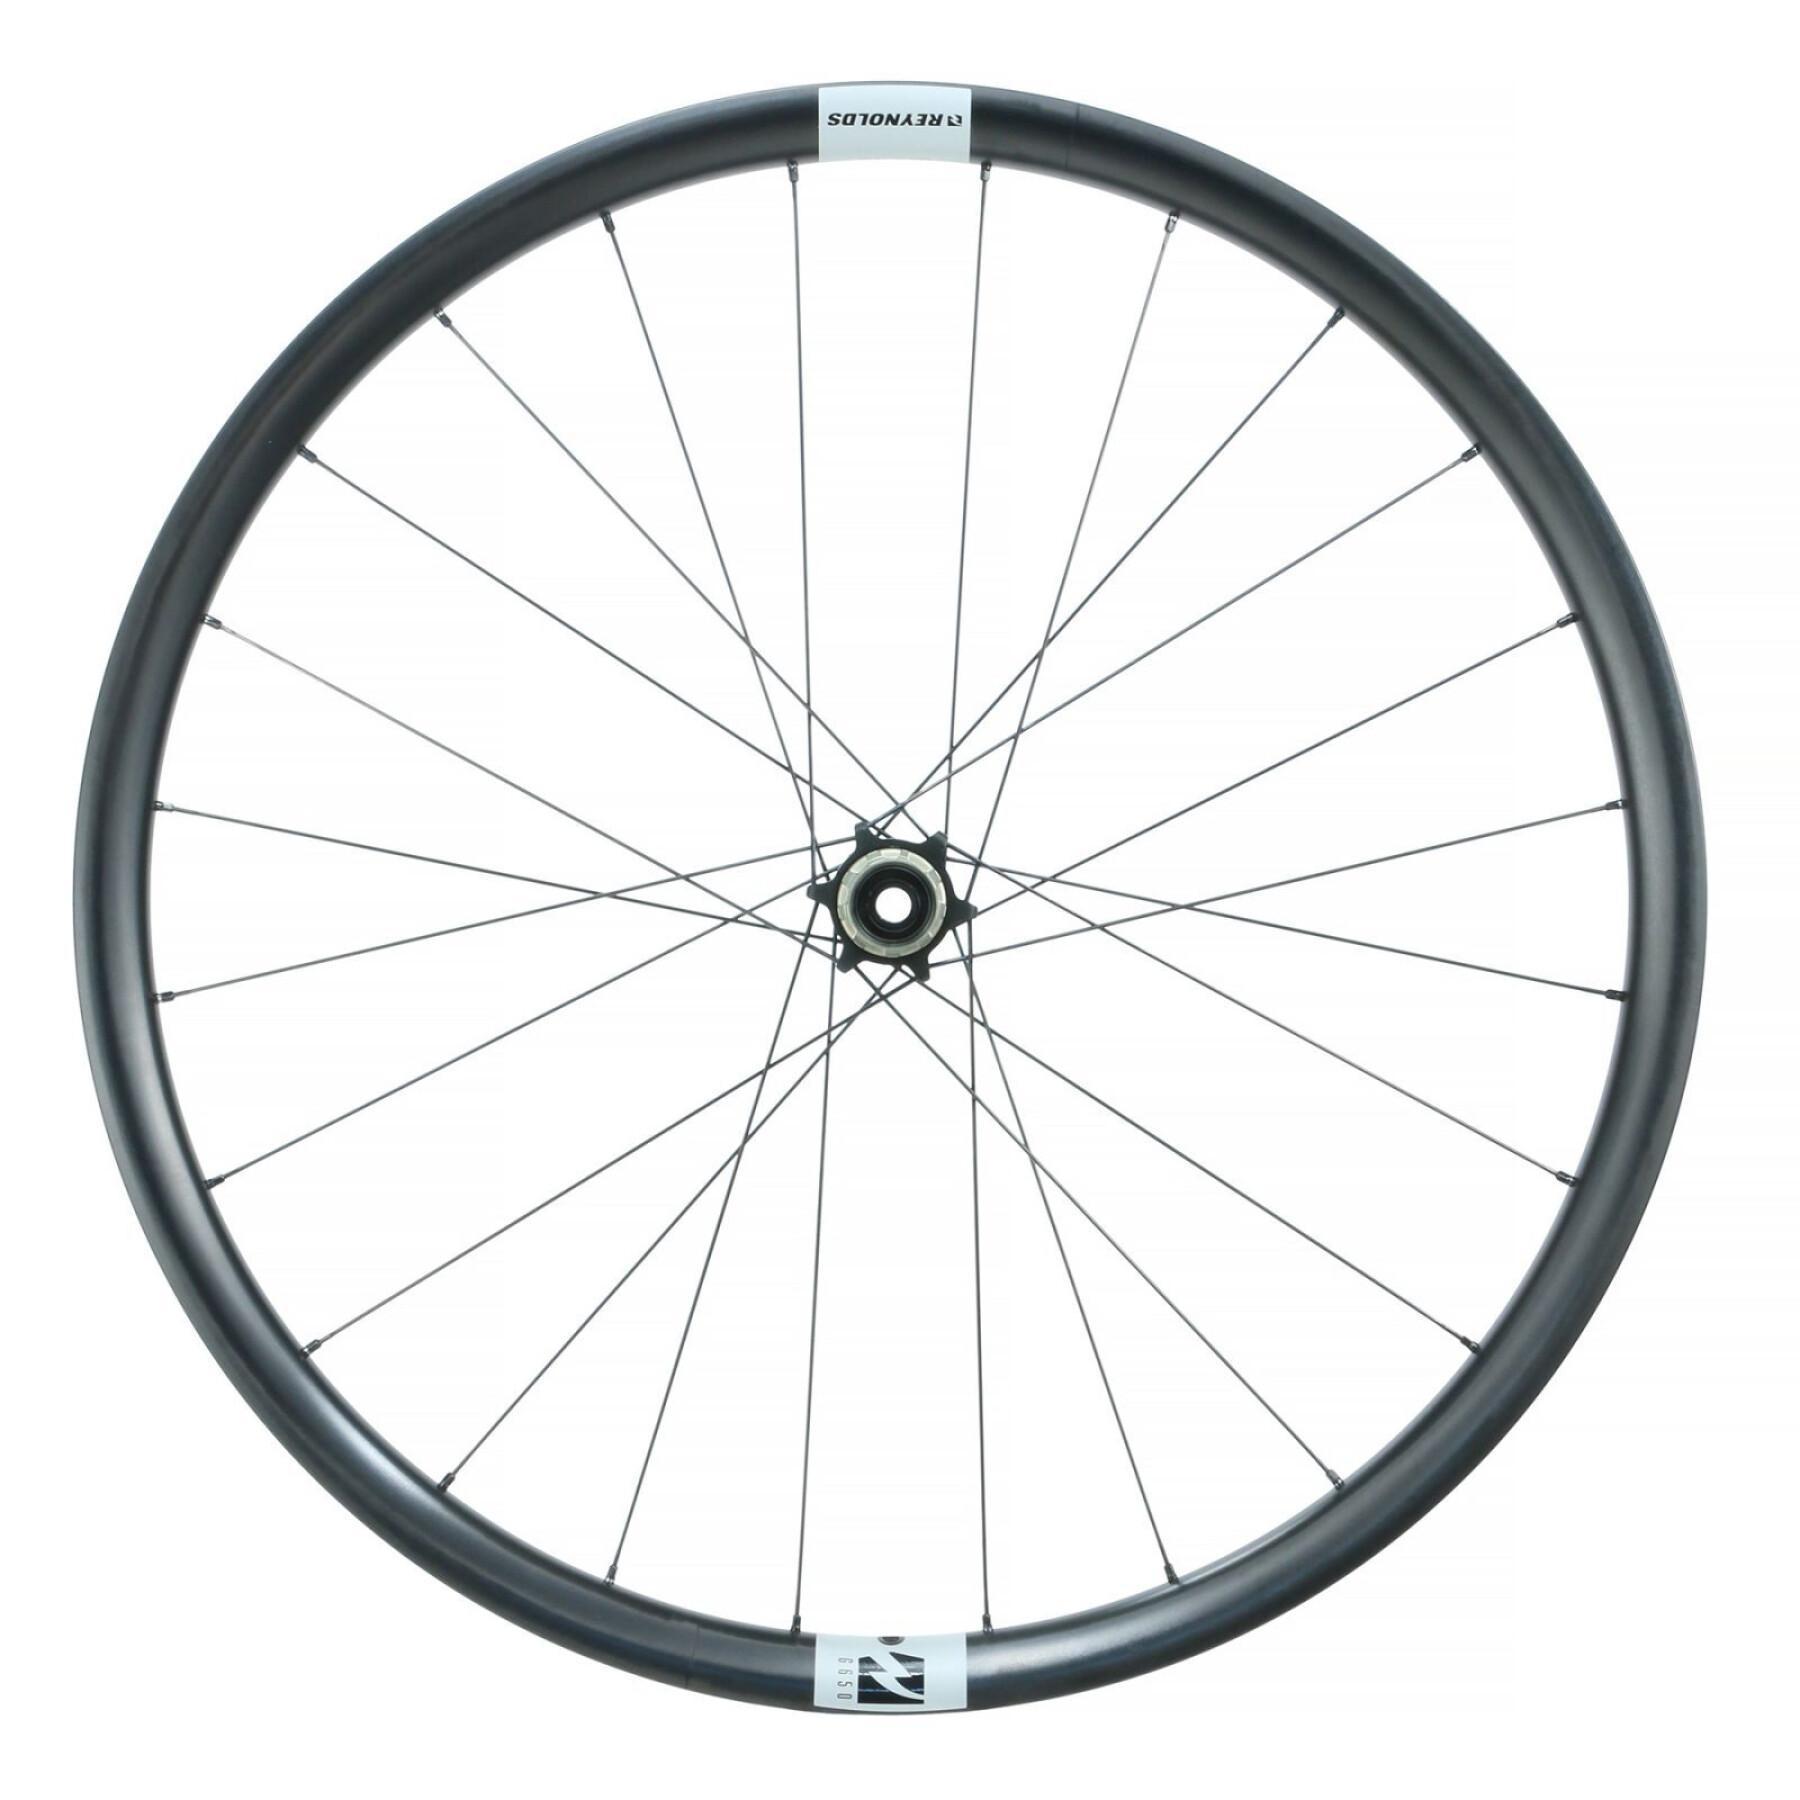 Pair of bicycle wheels Reynolds Blacklabel G650 Pro XDR 142